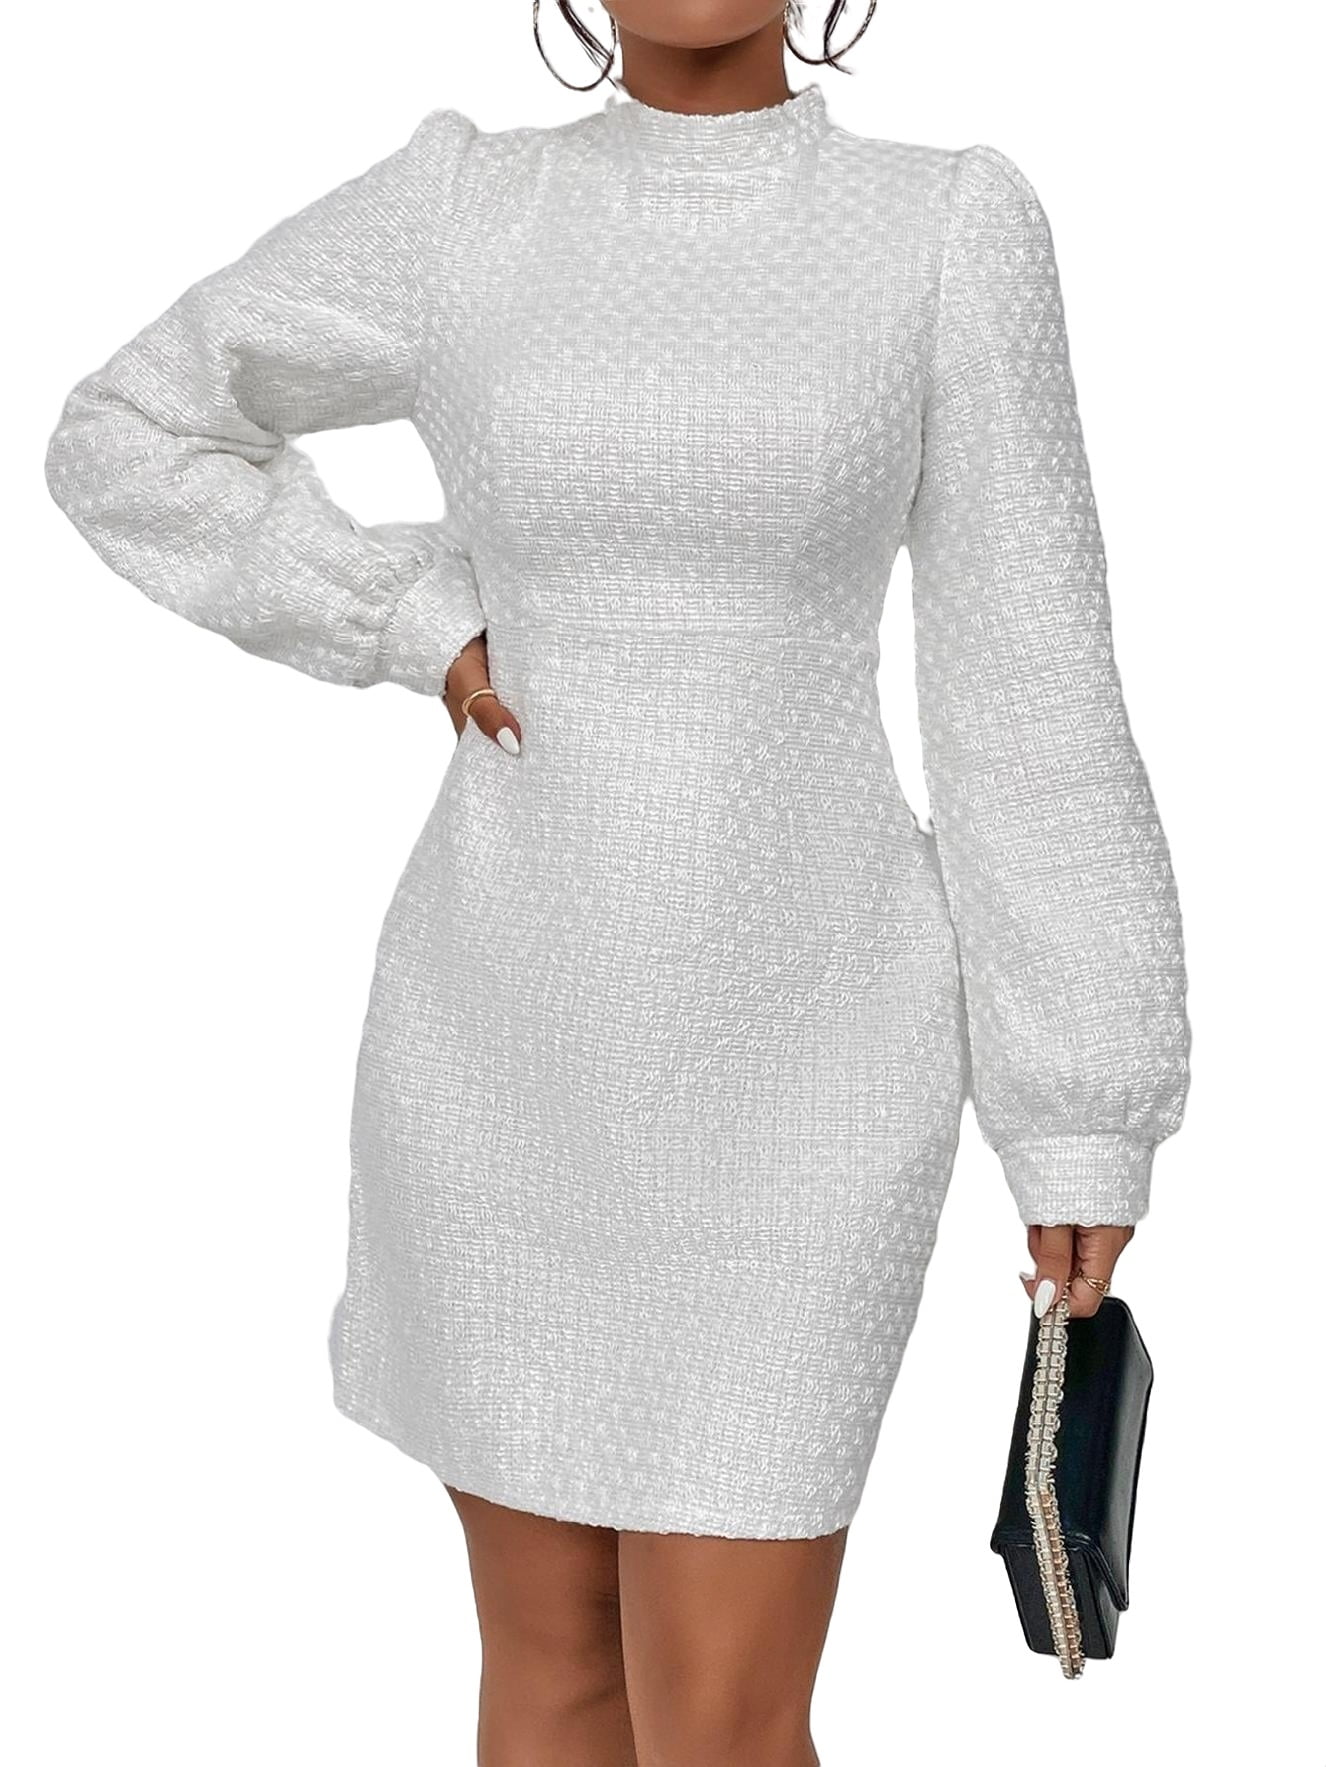 Plain White Fitted Dress | brebdude.com